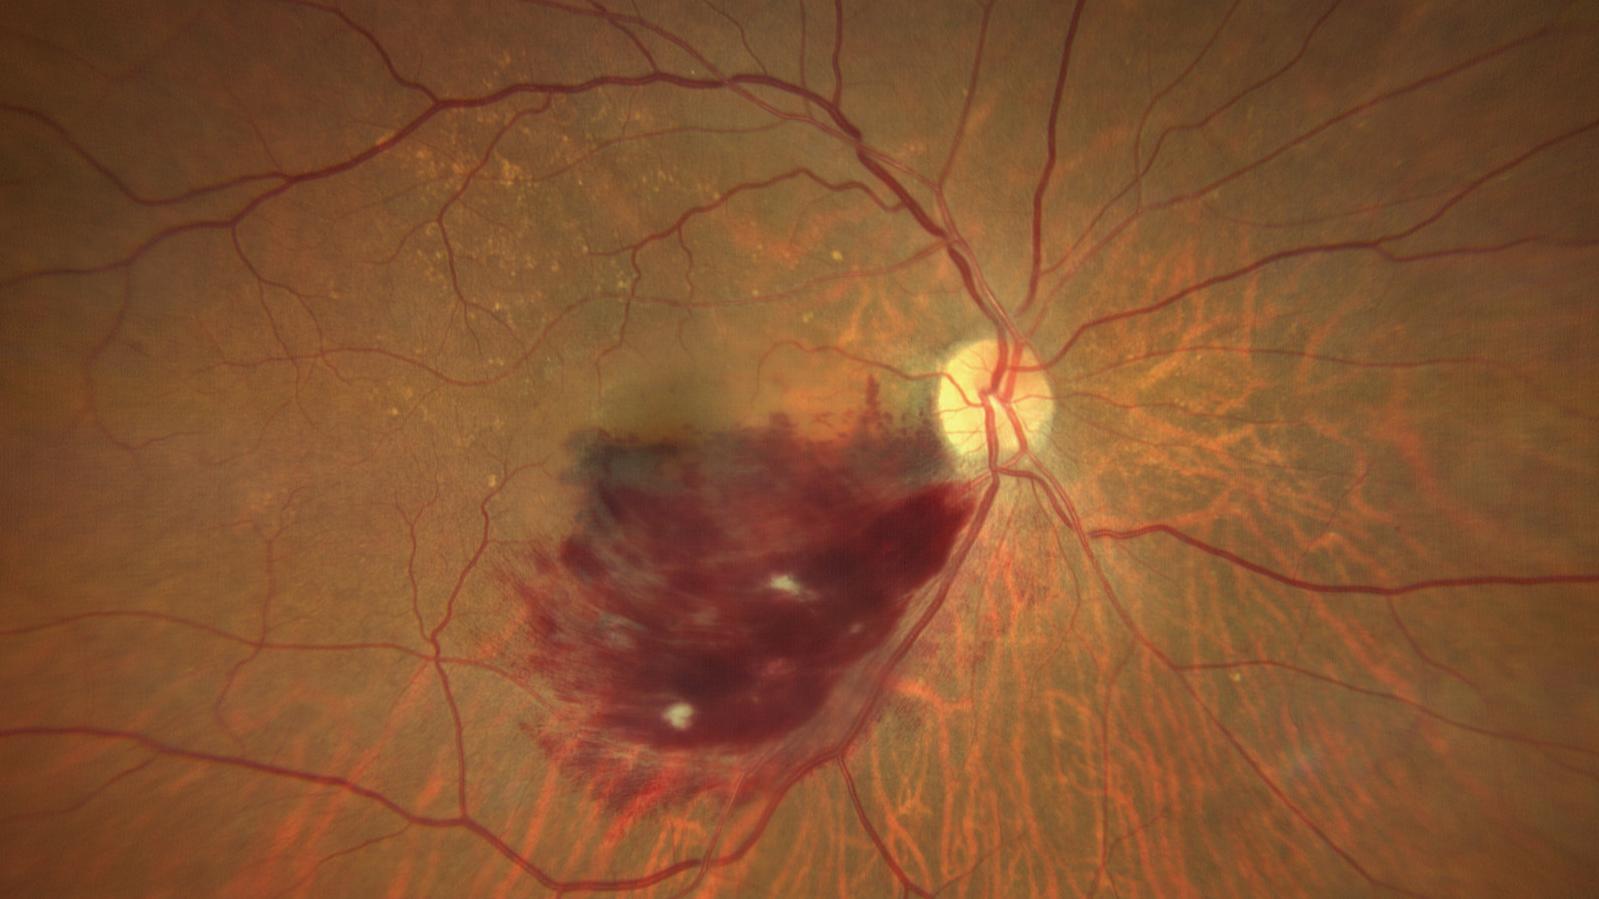 Branch Retinal Vein Occlusion Case 1 [80-yr old female]